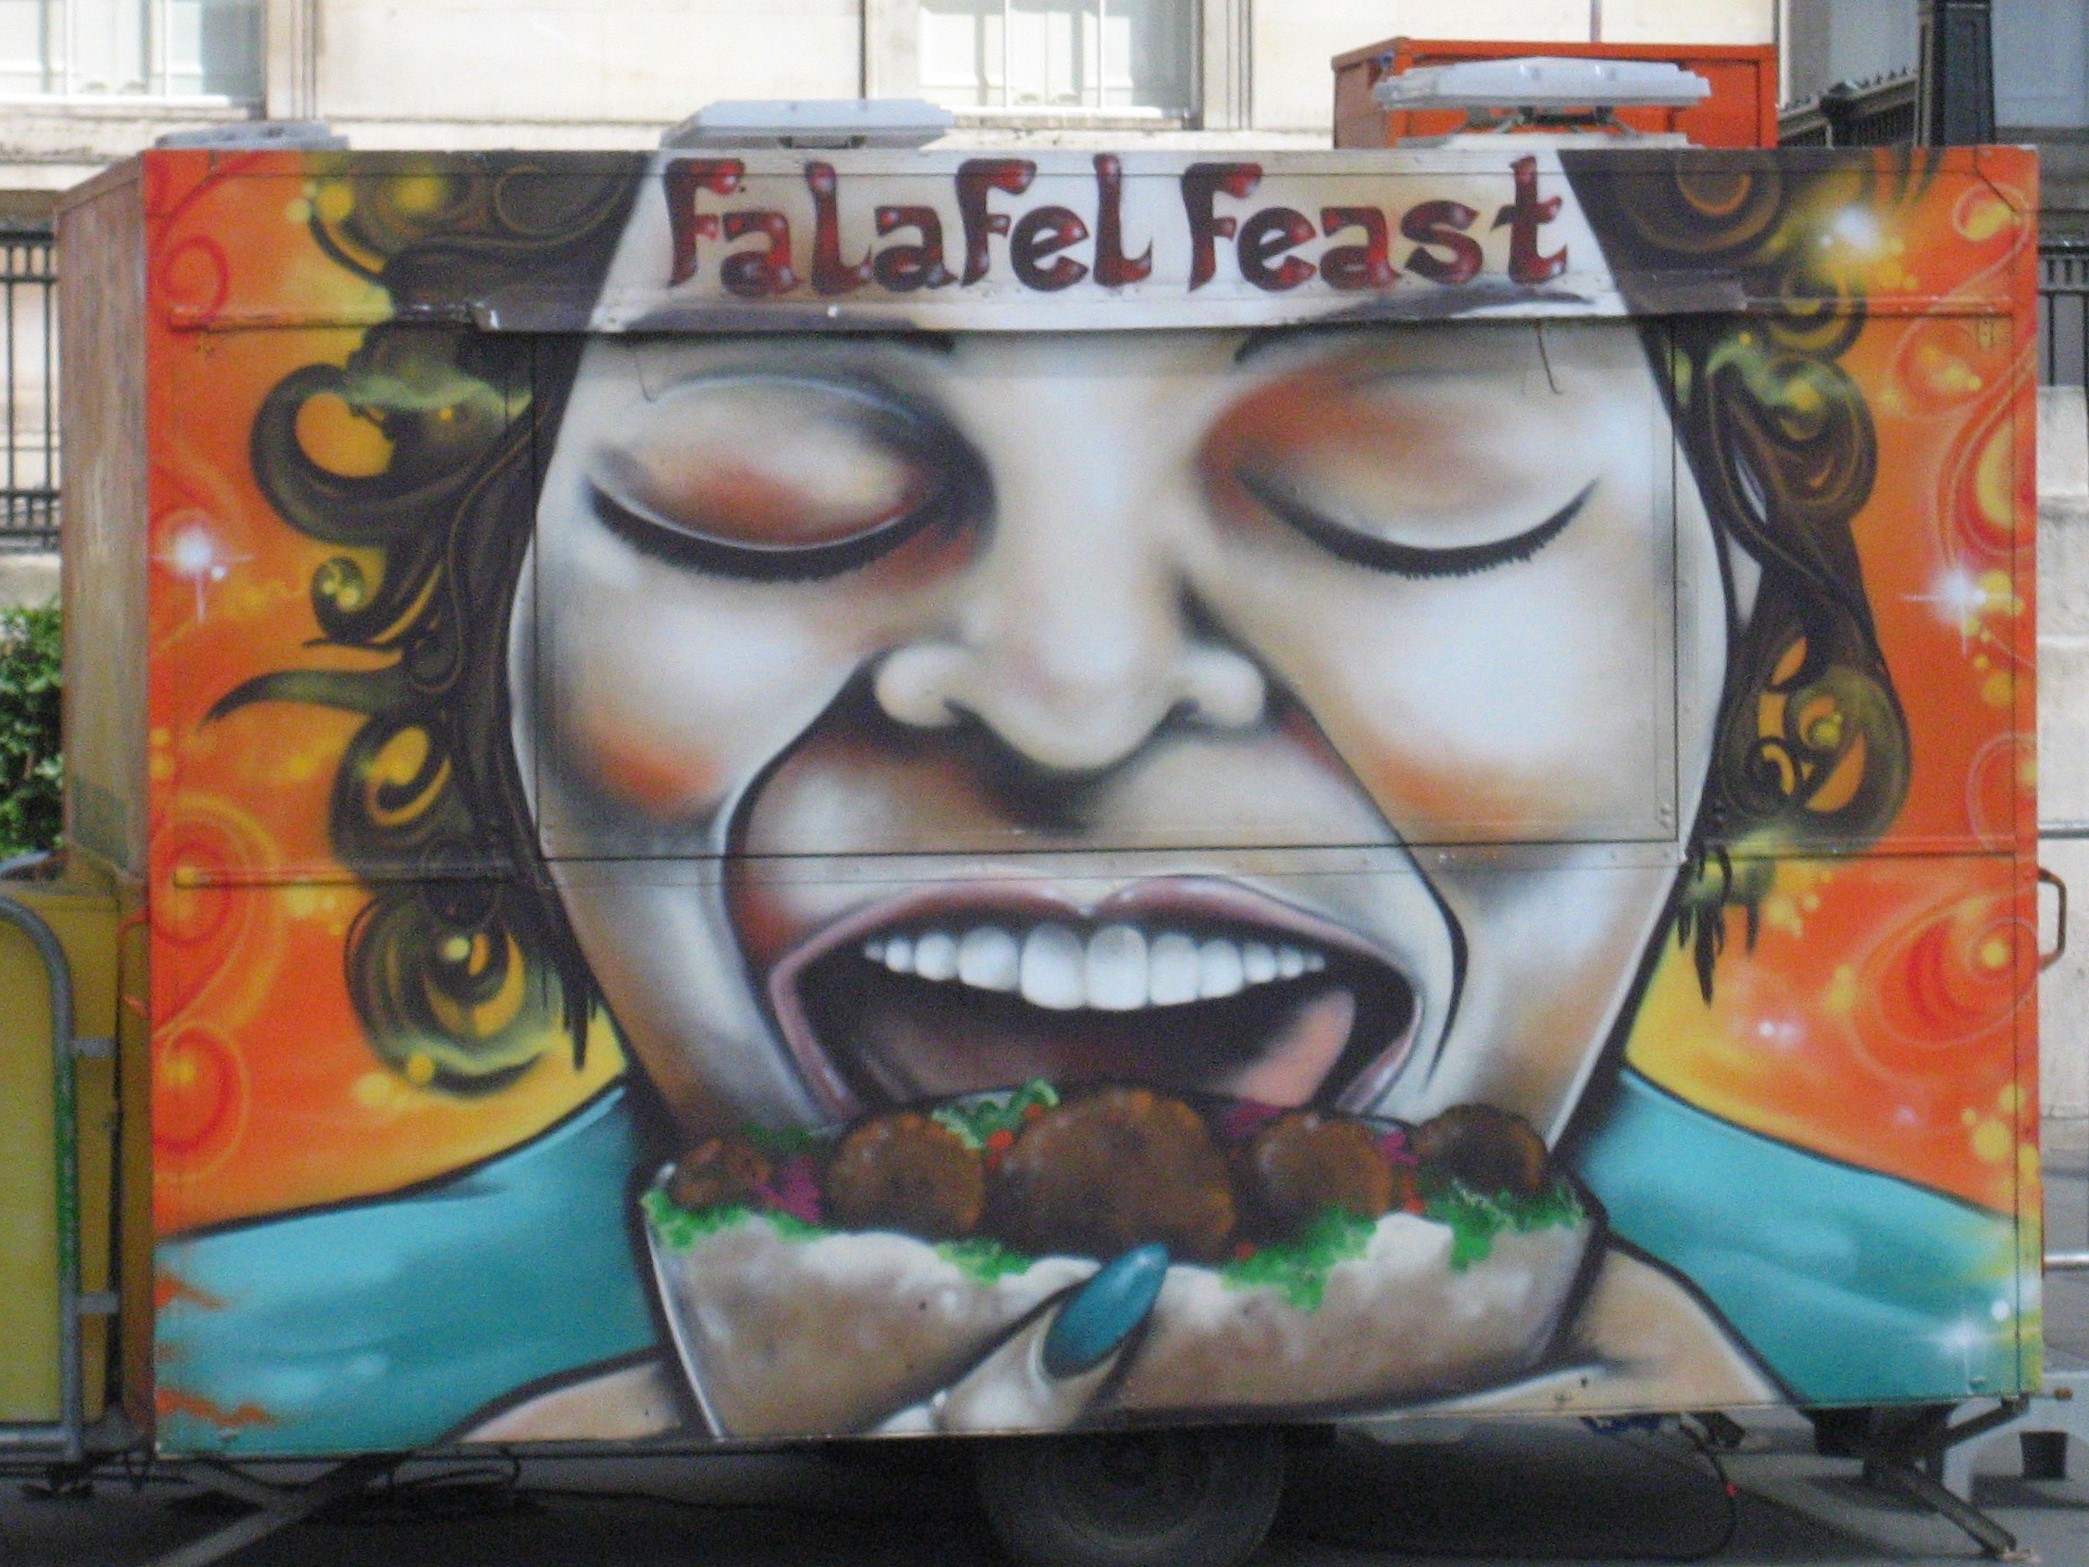 Food falafel - Street Art UK - London - by Steve Nimmons